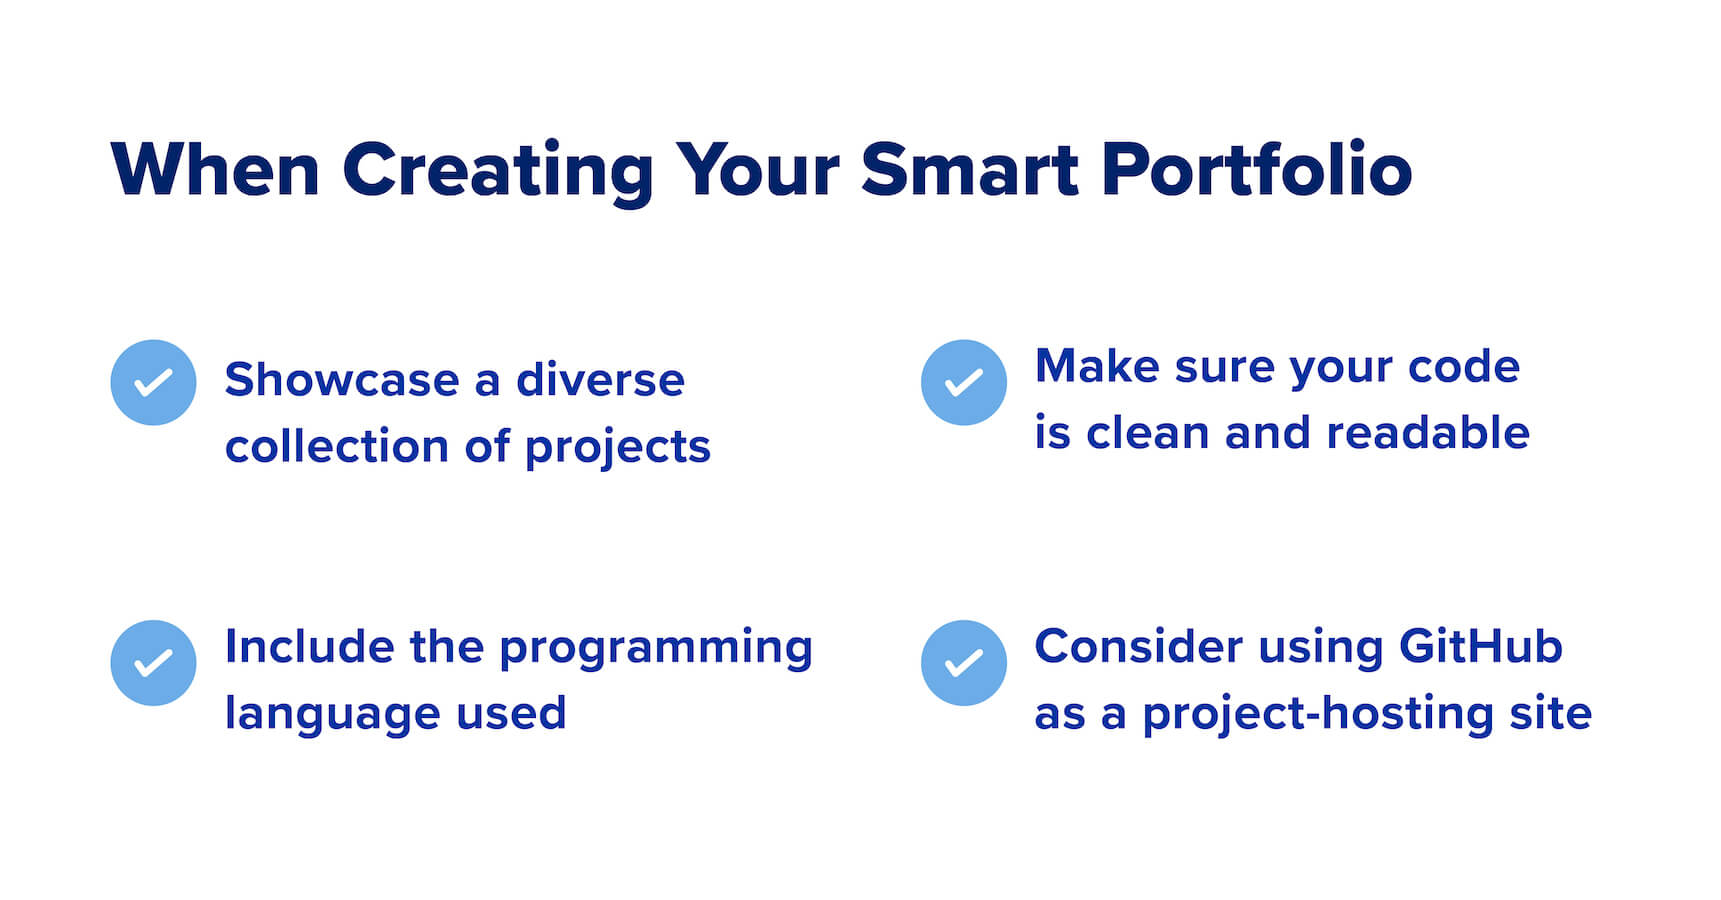 A checklist graphic for tips to create a smart portfolio. 